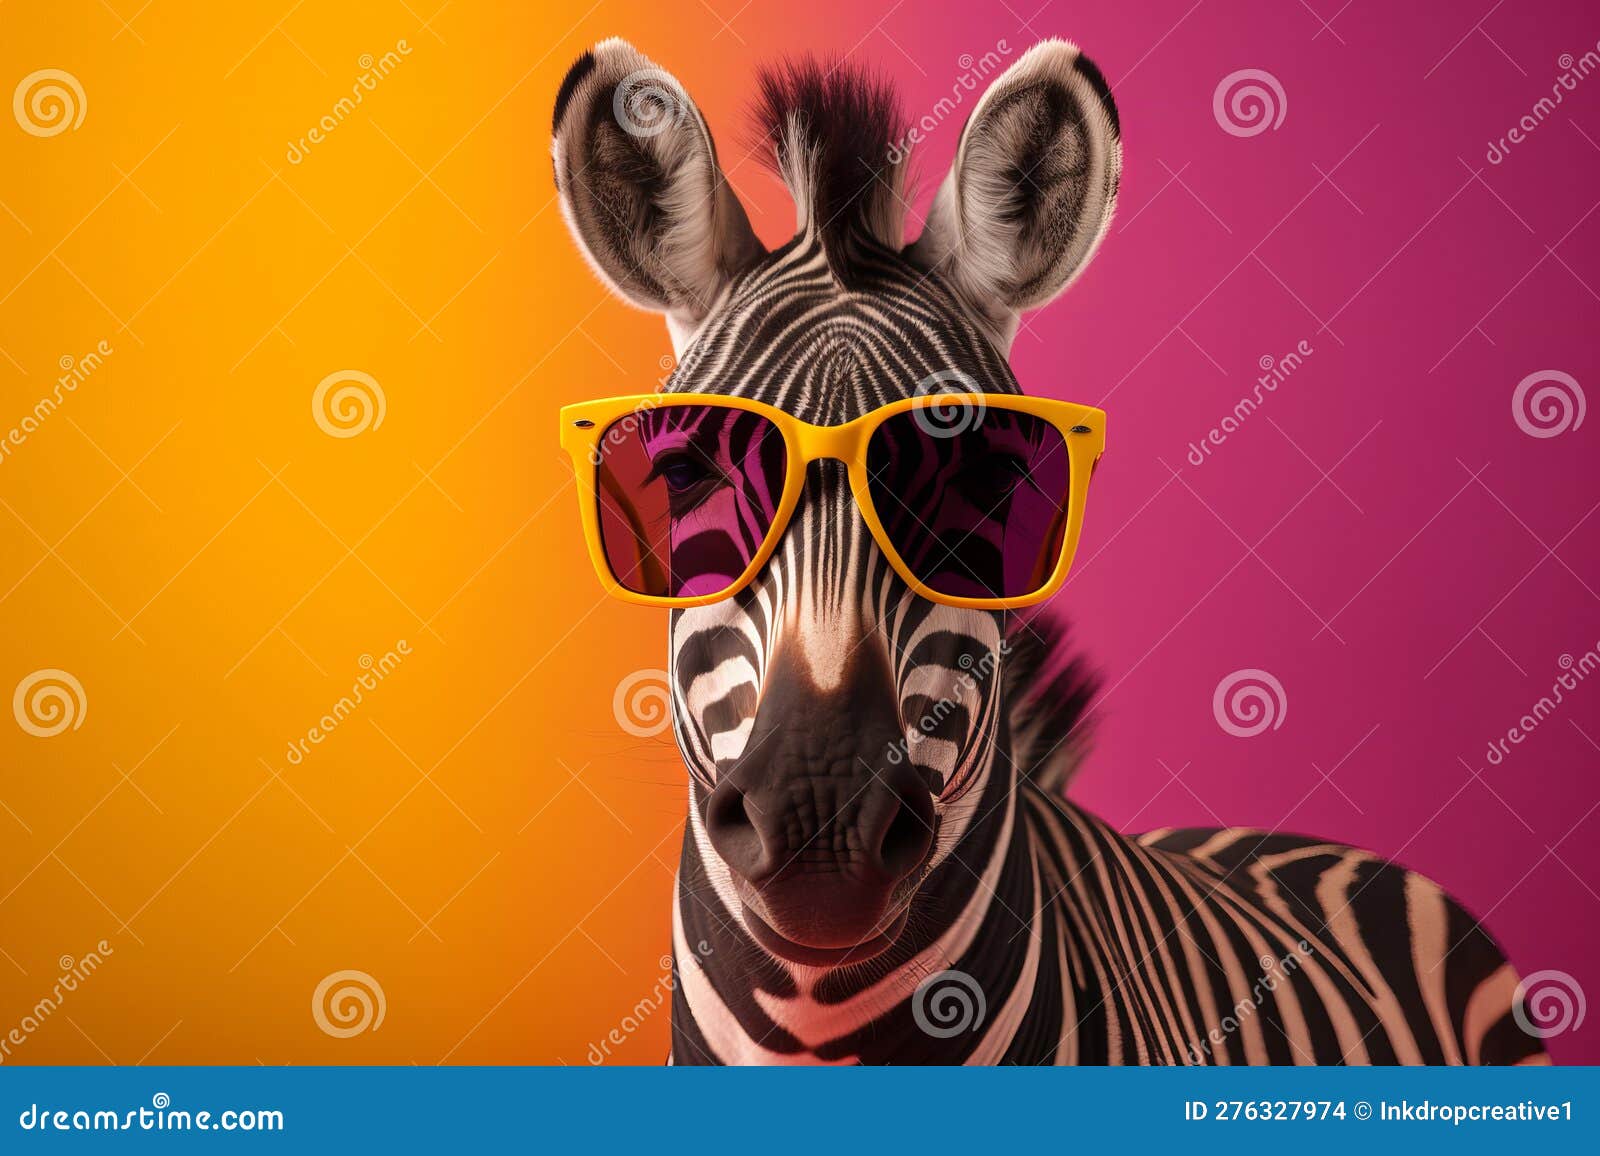 Portrait of a Trendy Zebra Wearing Cool Sunglasses. Summer Holiday ...